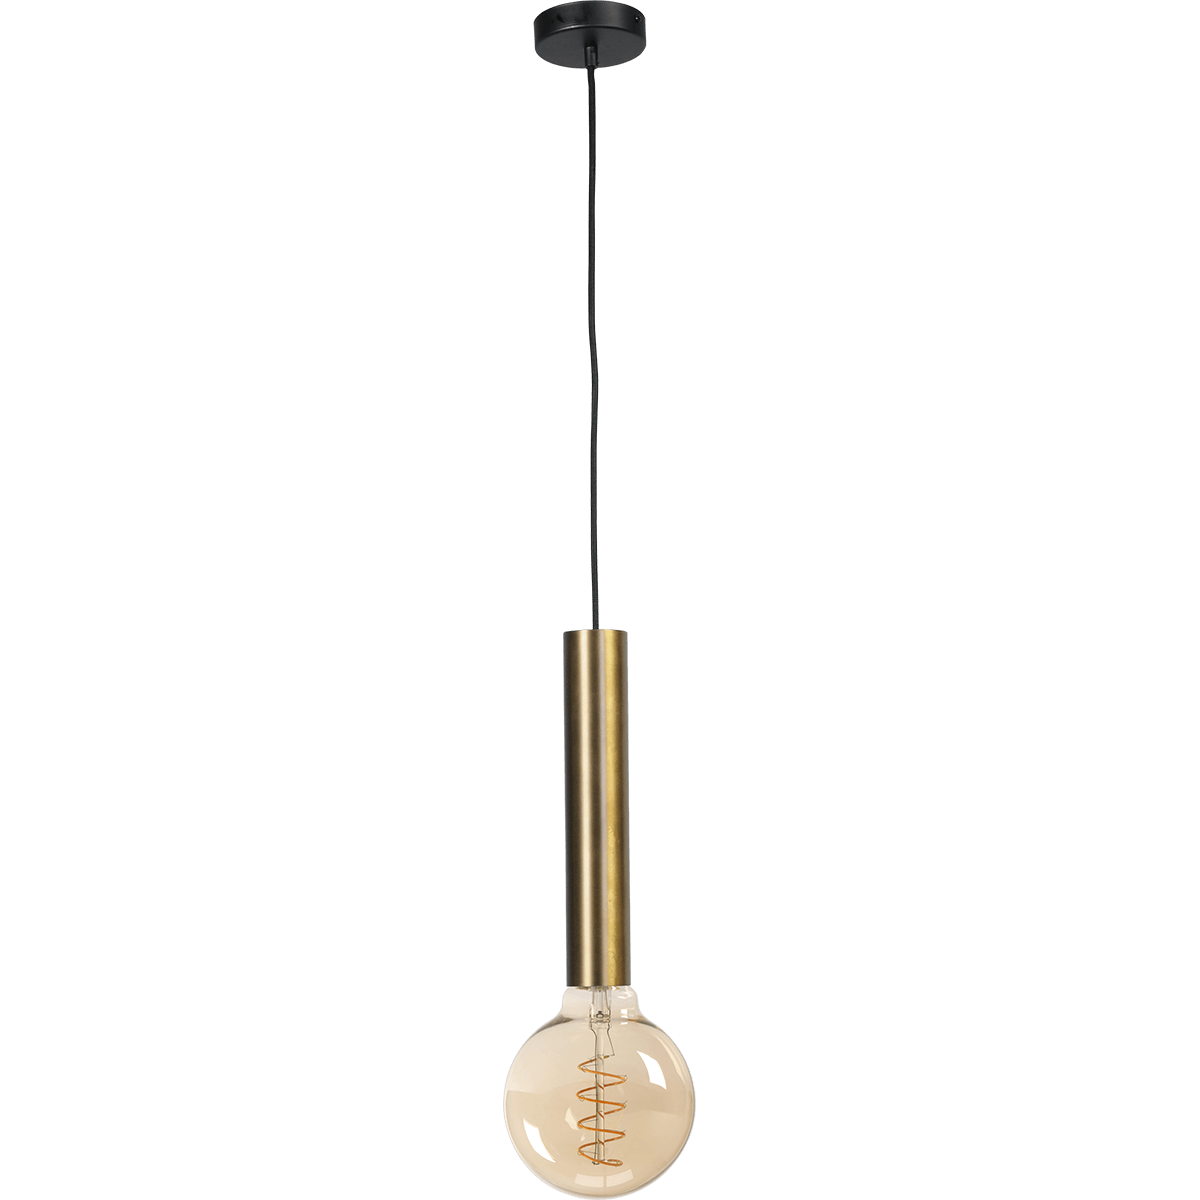 Hanglamp Tomasso 1-lichts antiek messing E27 - Ø45x250mm -  zwarte stoffen kabel 200cm - MASTERLIGHT